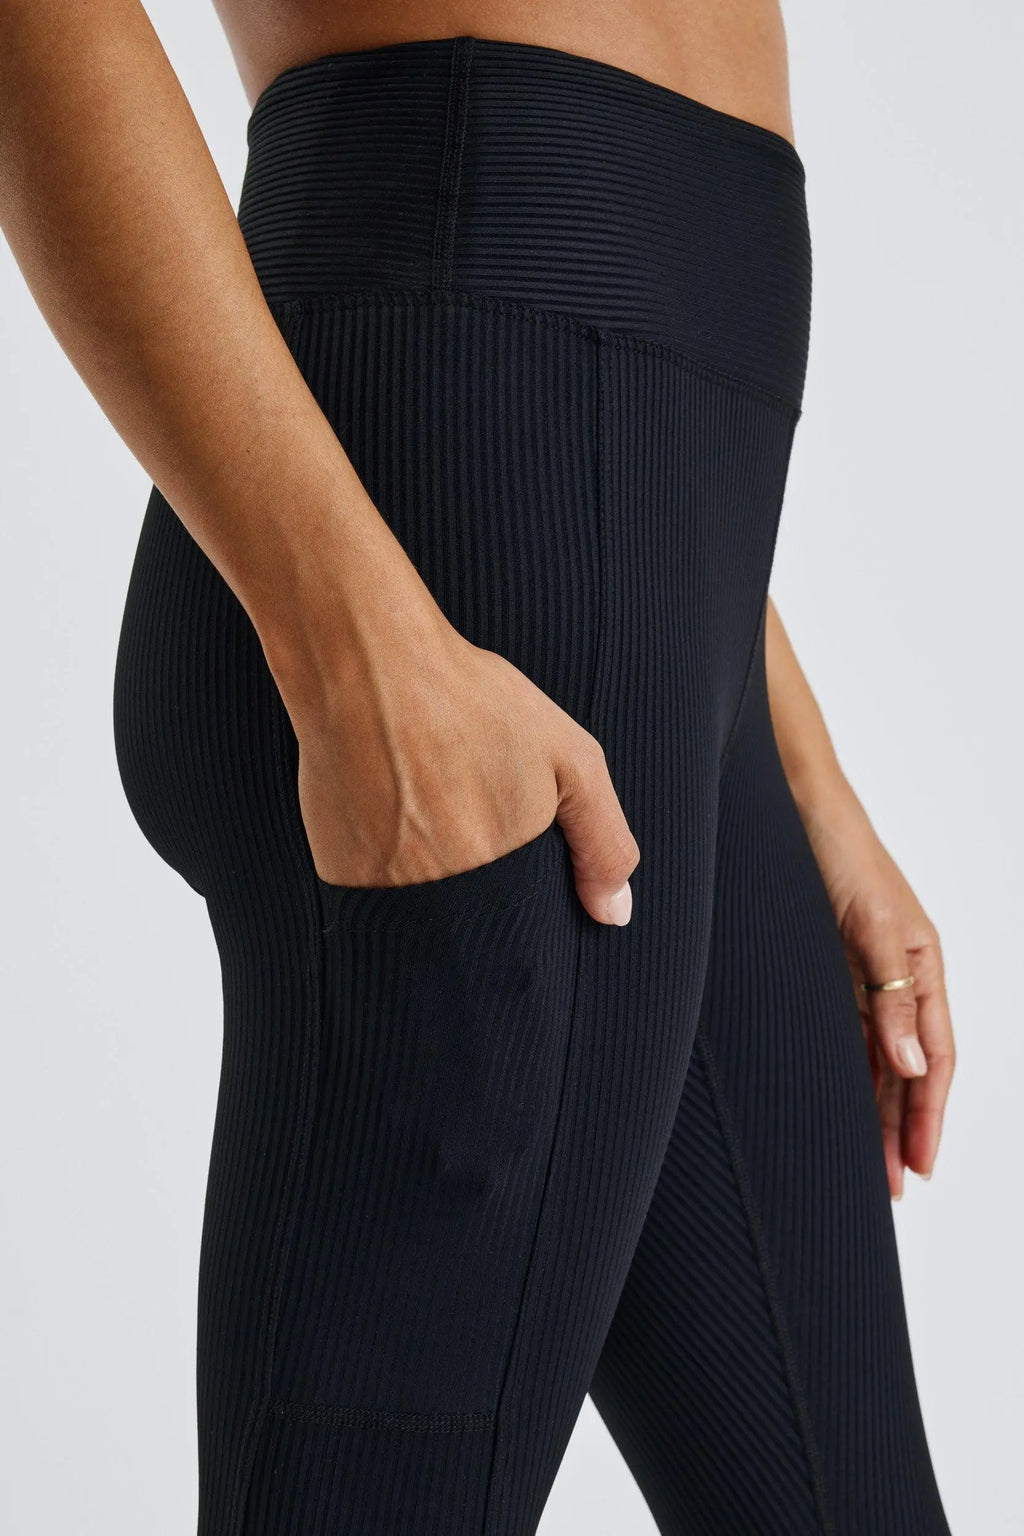 Lululemon Solid Black Crop Legging with Side Pockets and Ribbed